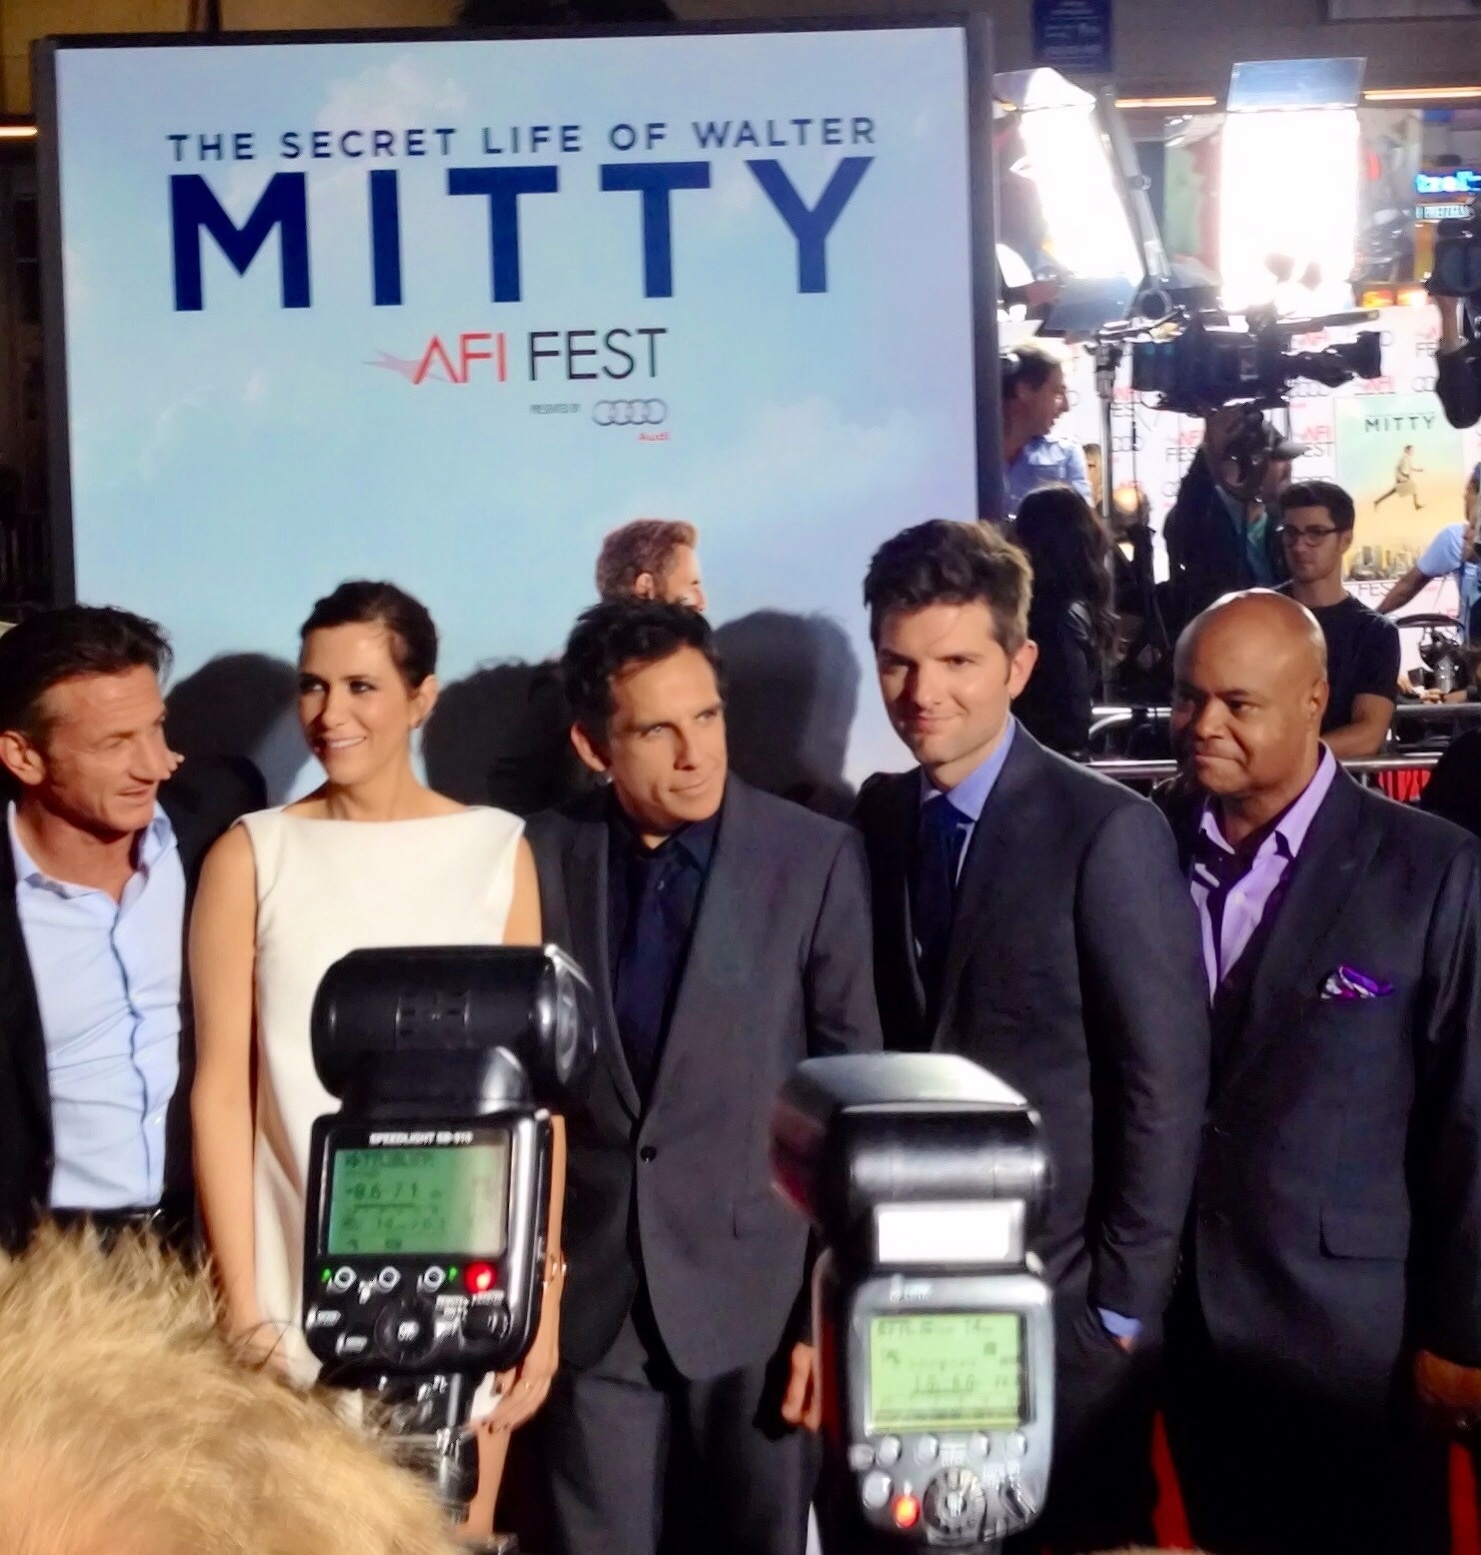 Terence Bernie Hines with Sean Penn, Kristen Wiig, Ben Stiller and Adam Scott at The Secret Life of Walter Mitty premier.